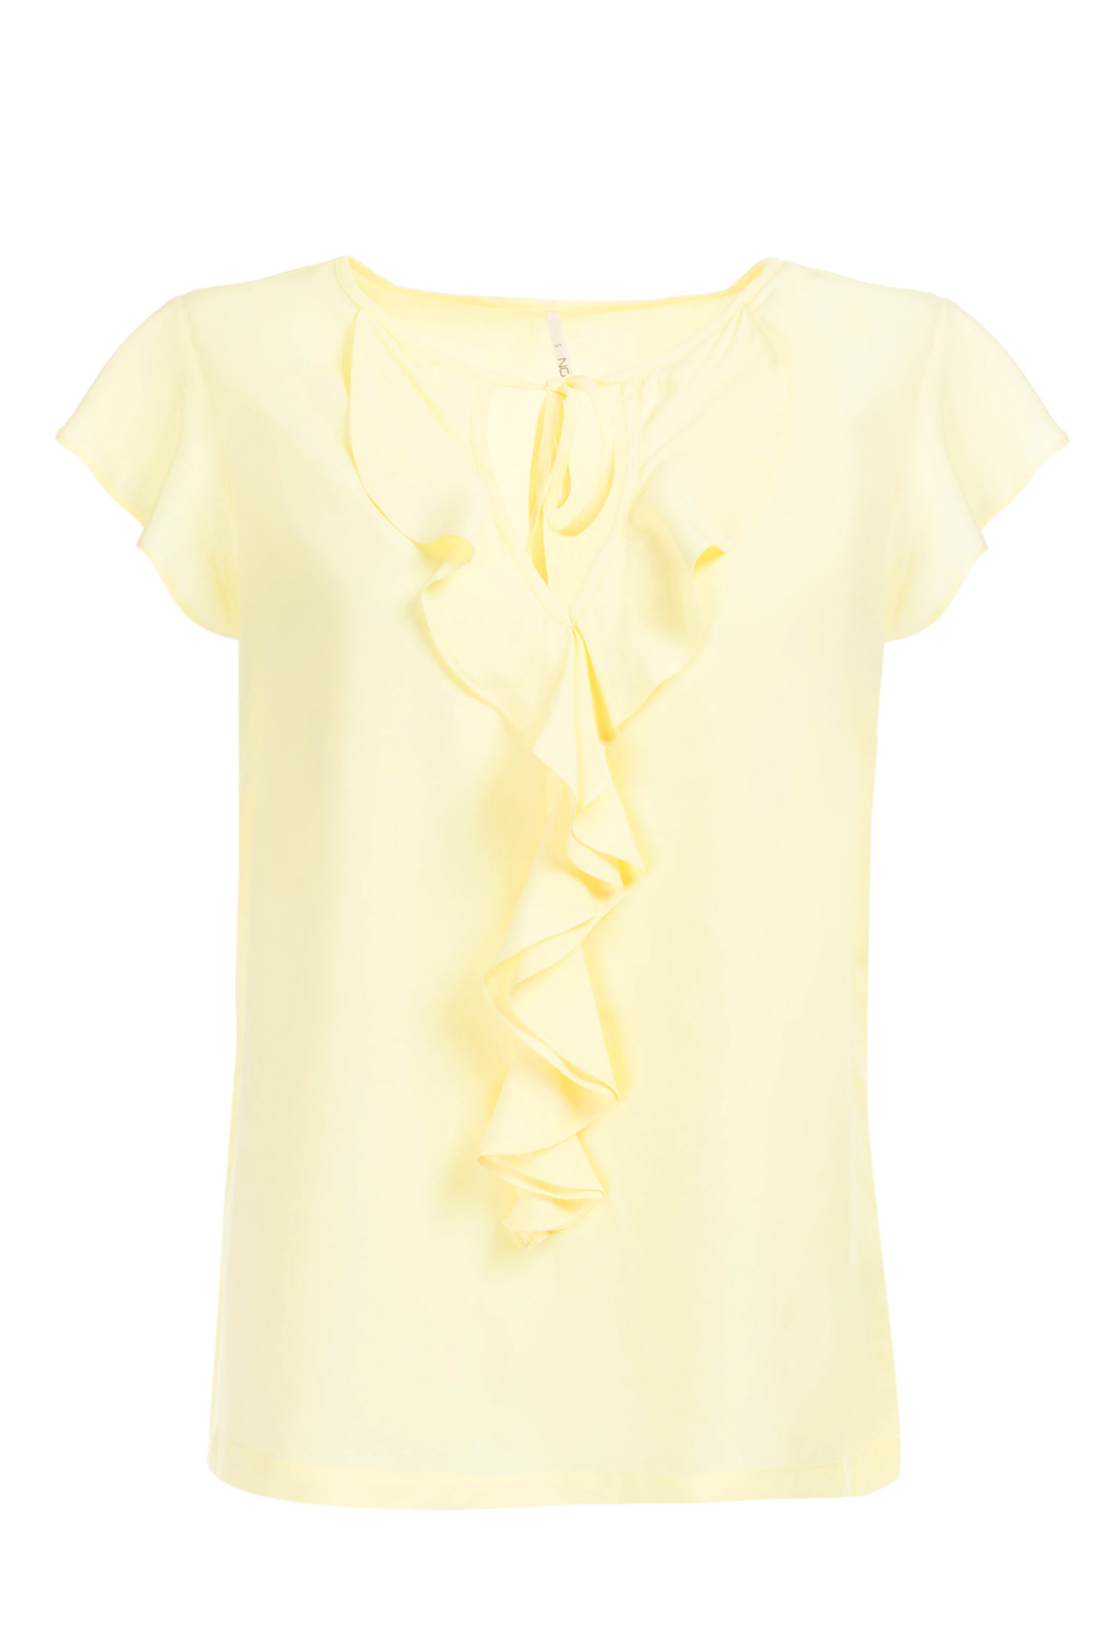 Блузка с рюшами (арт. baon B197013), размер XXL, цвет желтый Блузка с рюшами (арт. baon B197013) - фото 4